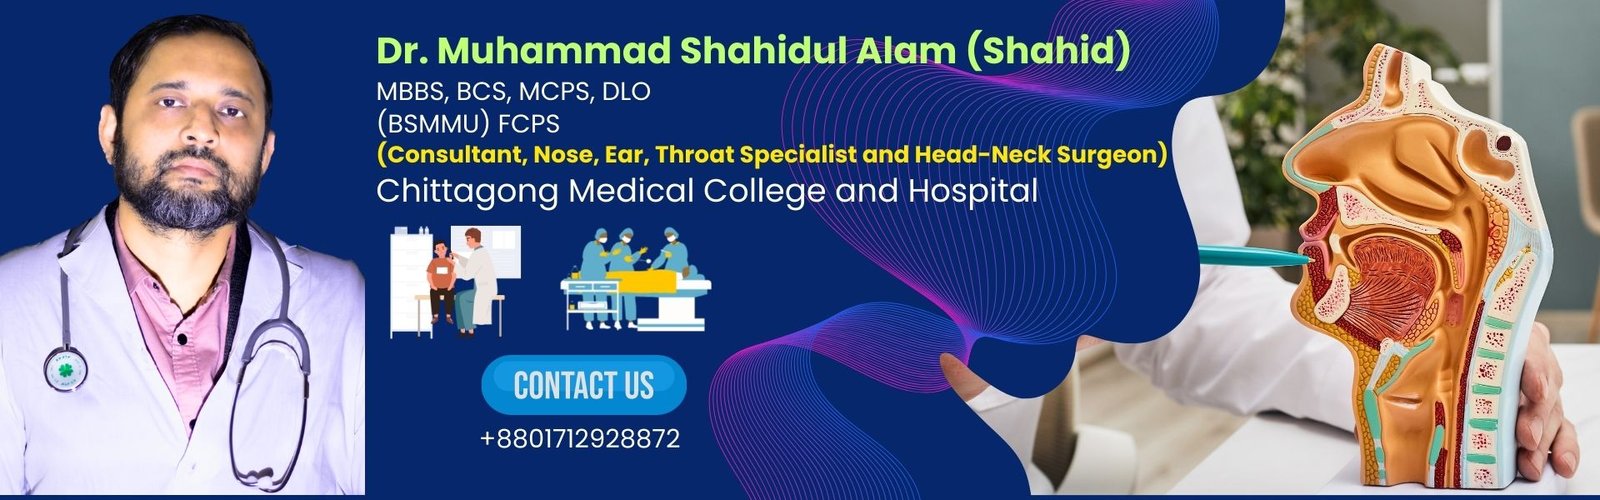 Dr. Mohammad Shahidul Alam (Shahid) Dekstop 5 (2)